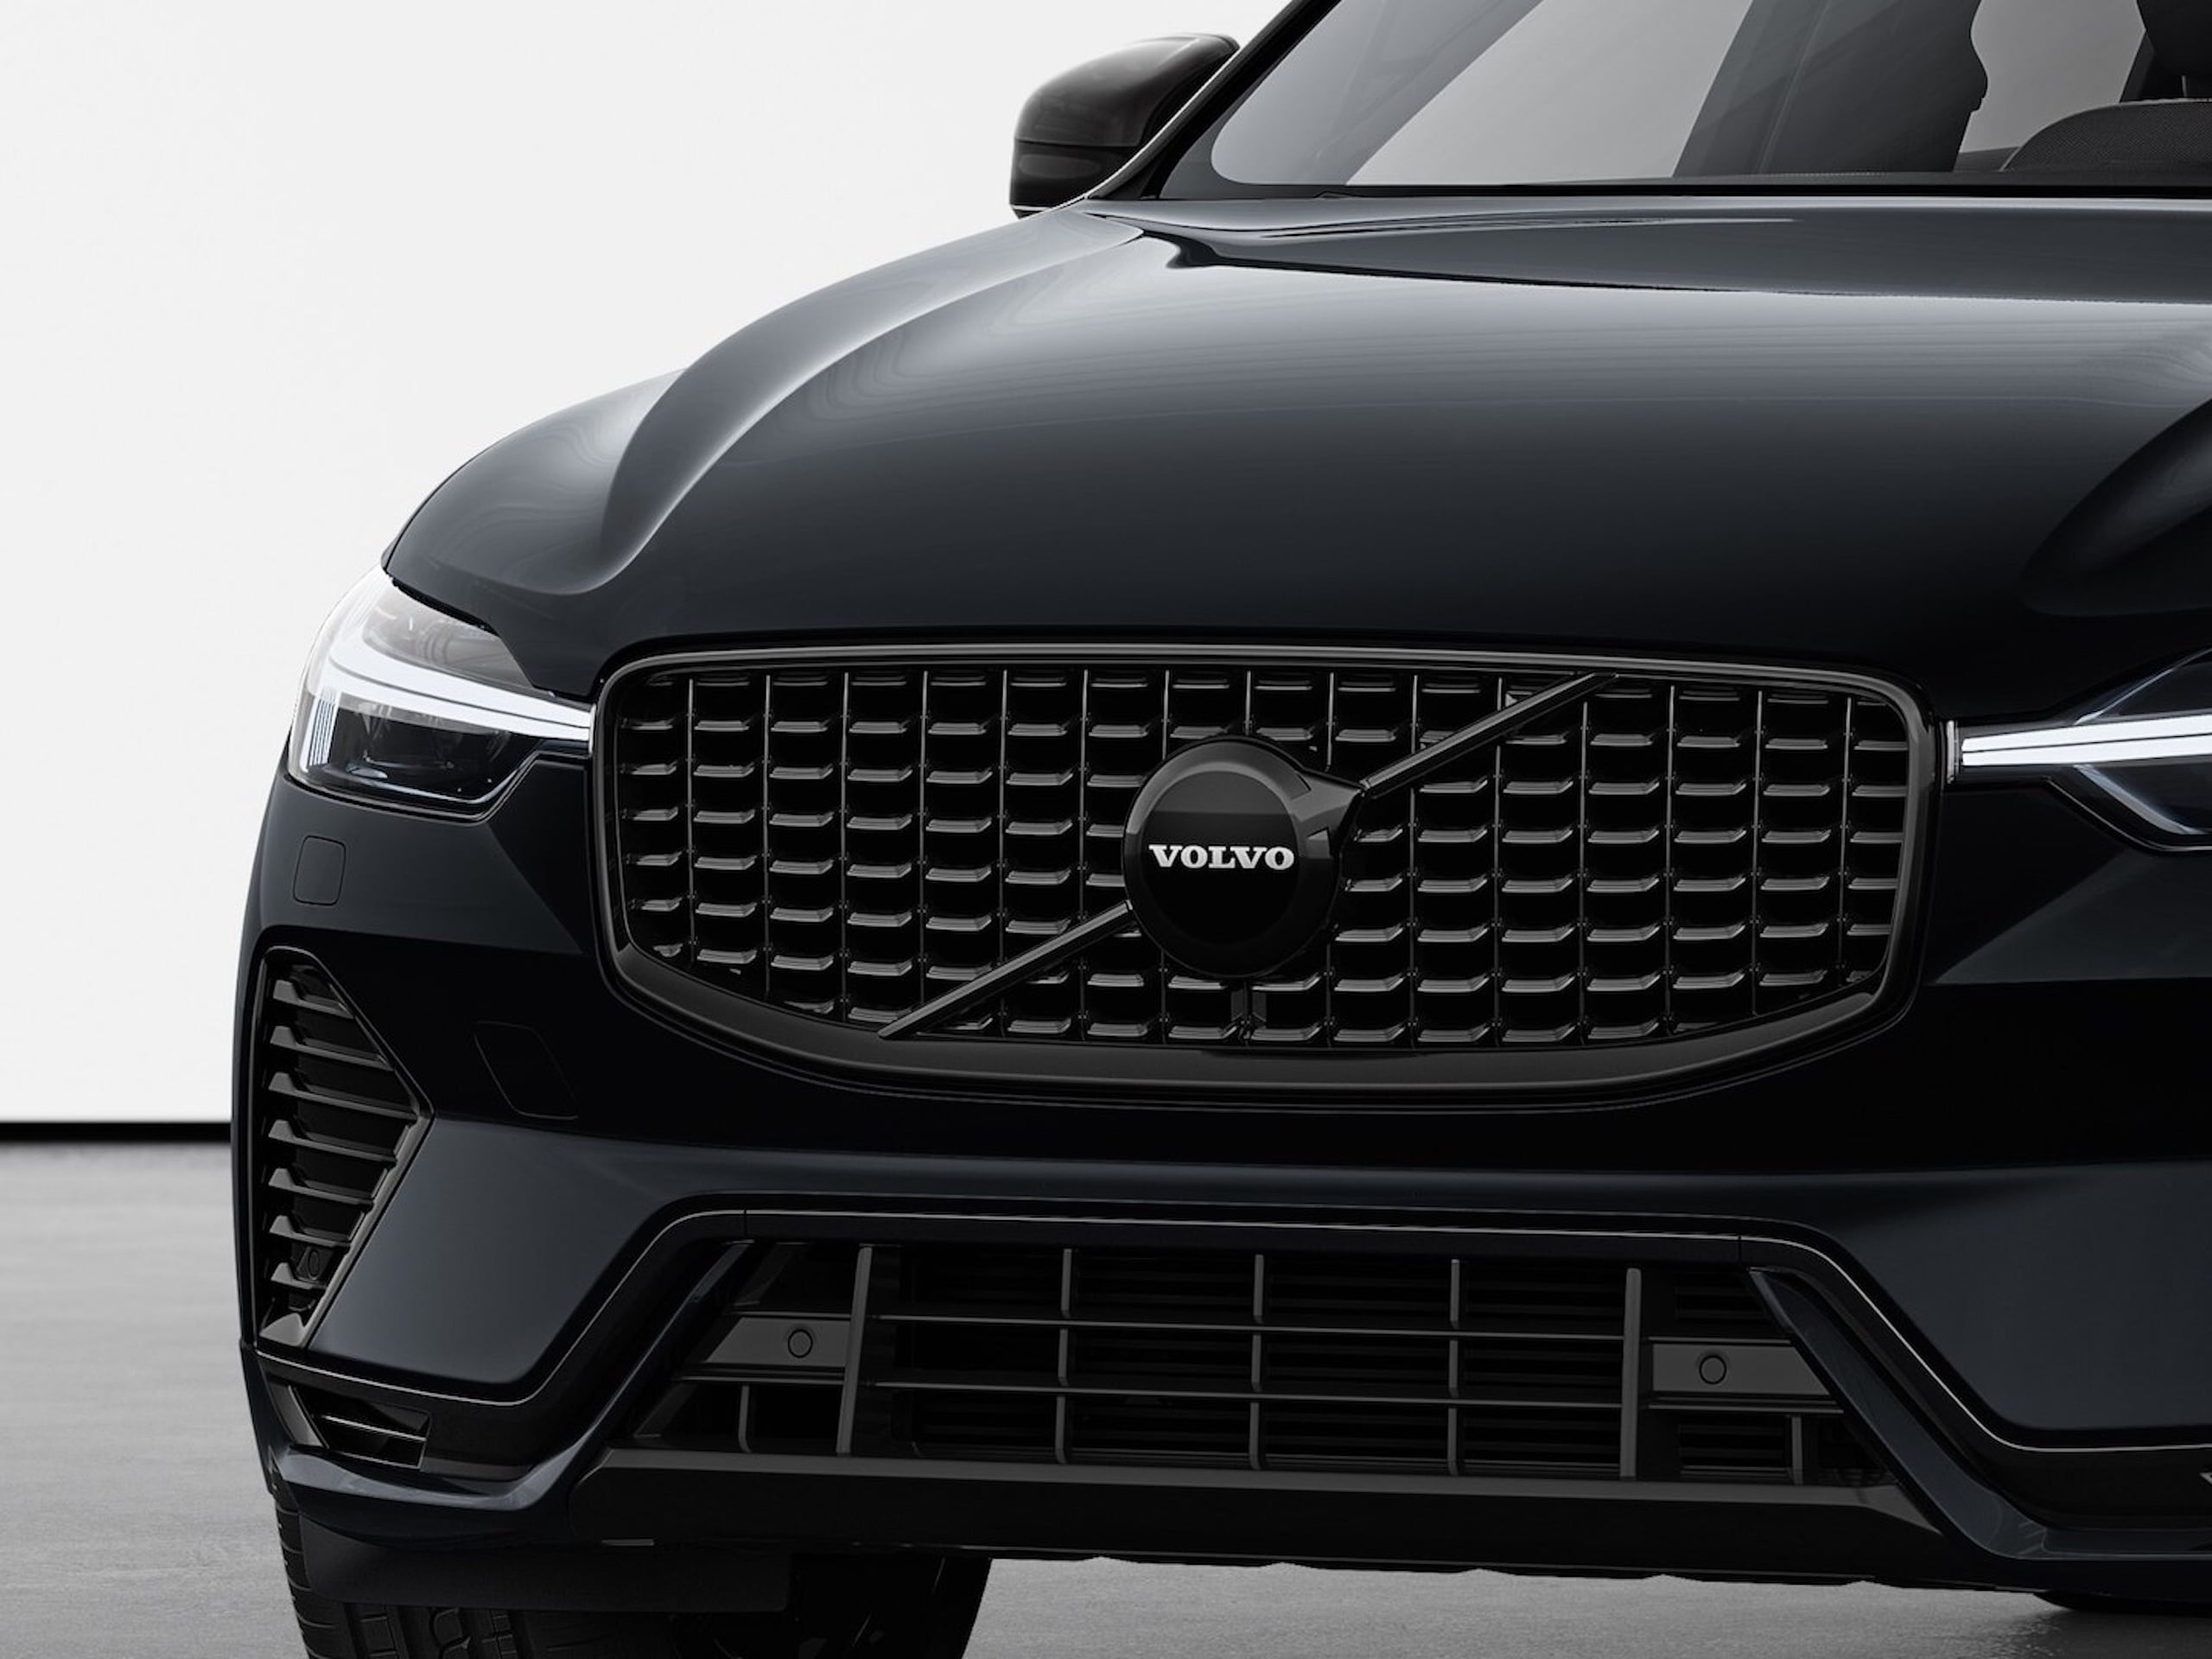 Volvo exterior black edition grill